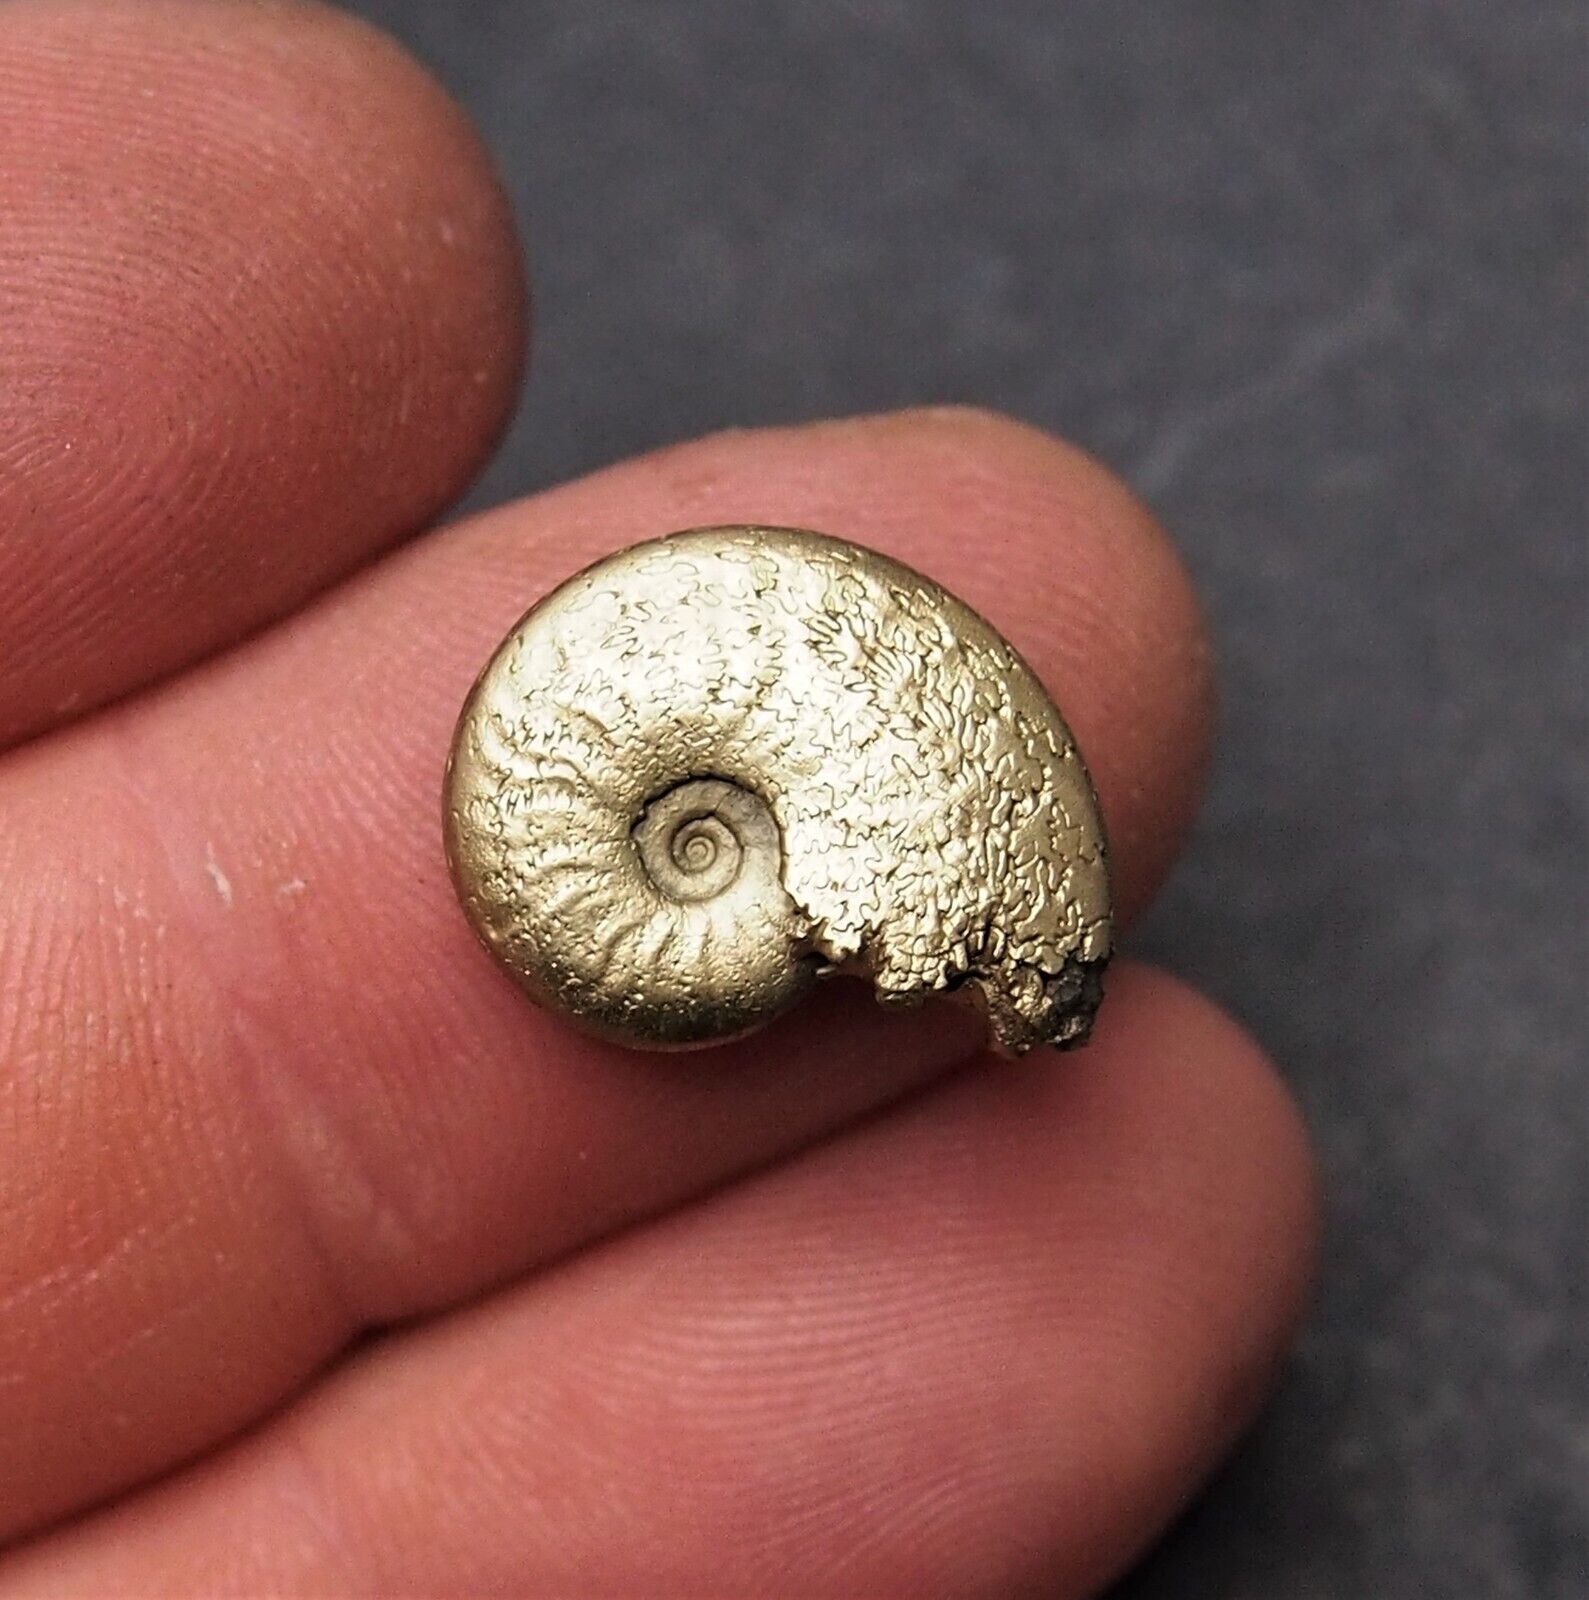 19mm Ammonite Pyrite Fossil Fossilien Ammoniten France Golden Lot